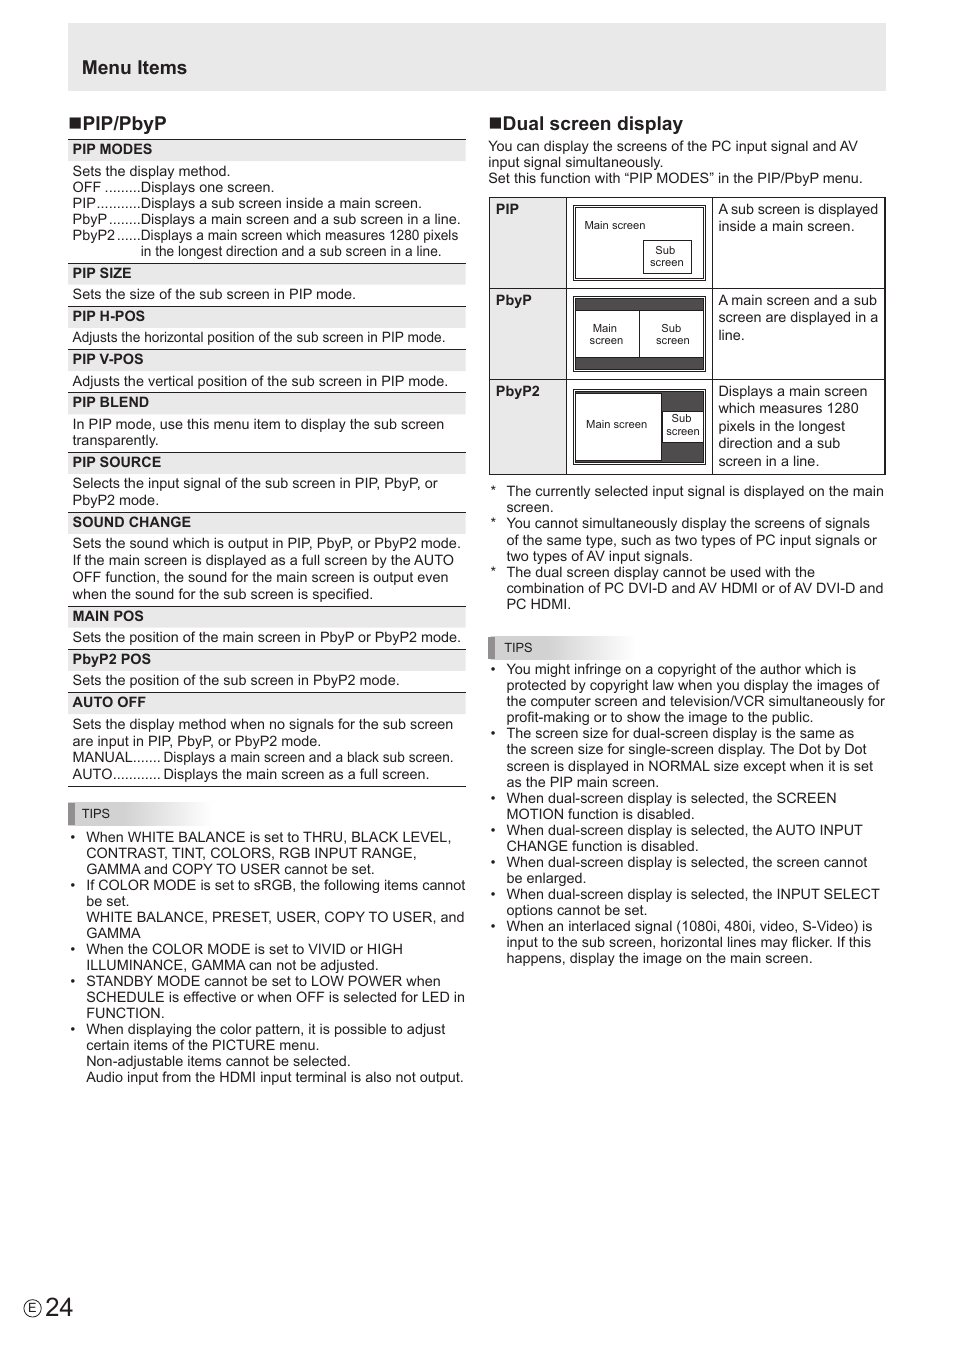 Menu items n pip/pbyp, Ndual screen display | Sharp PN-E802 User Manual | Page 24 / 56